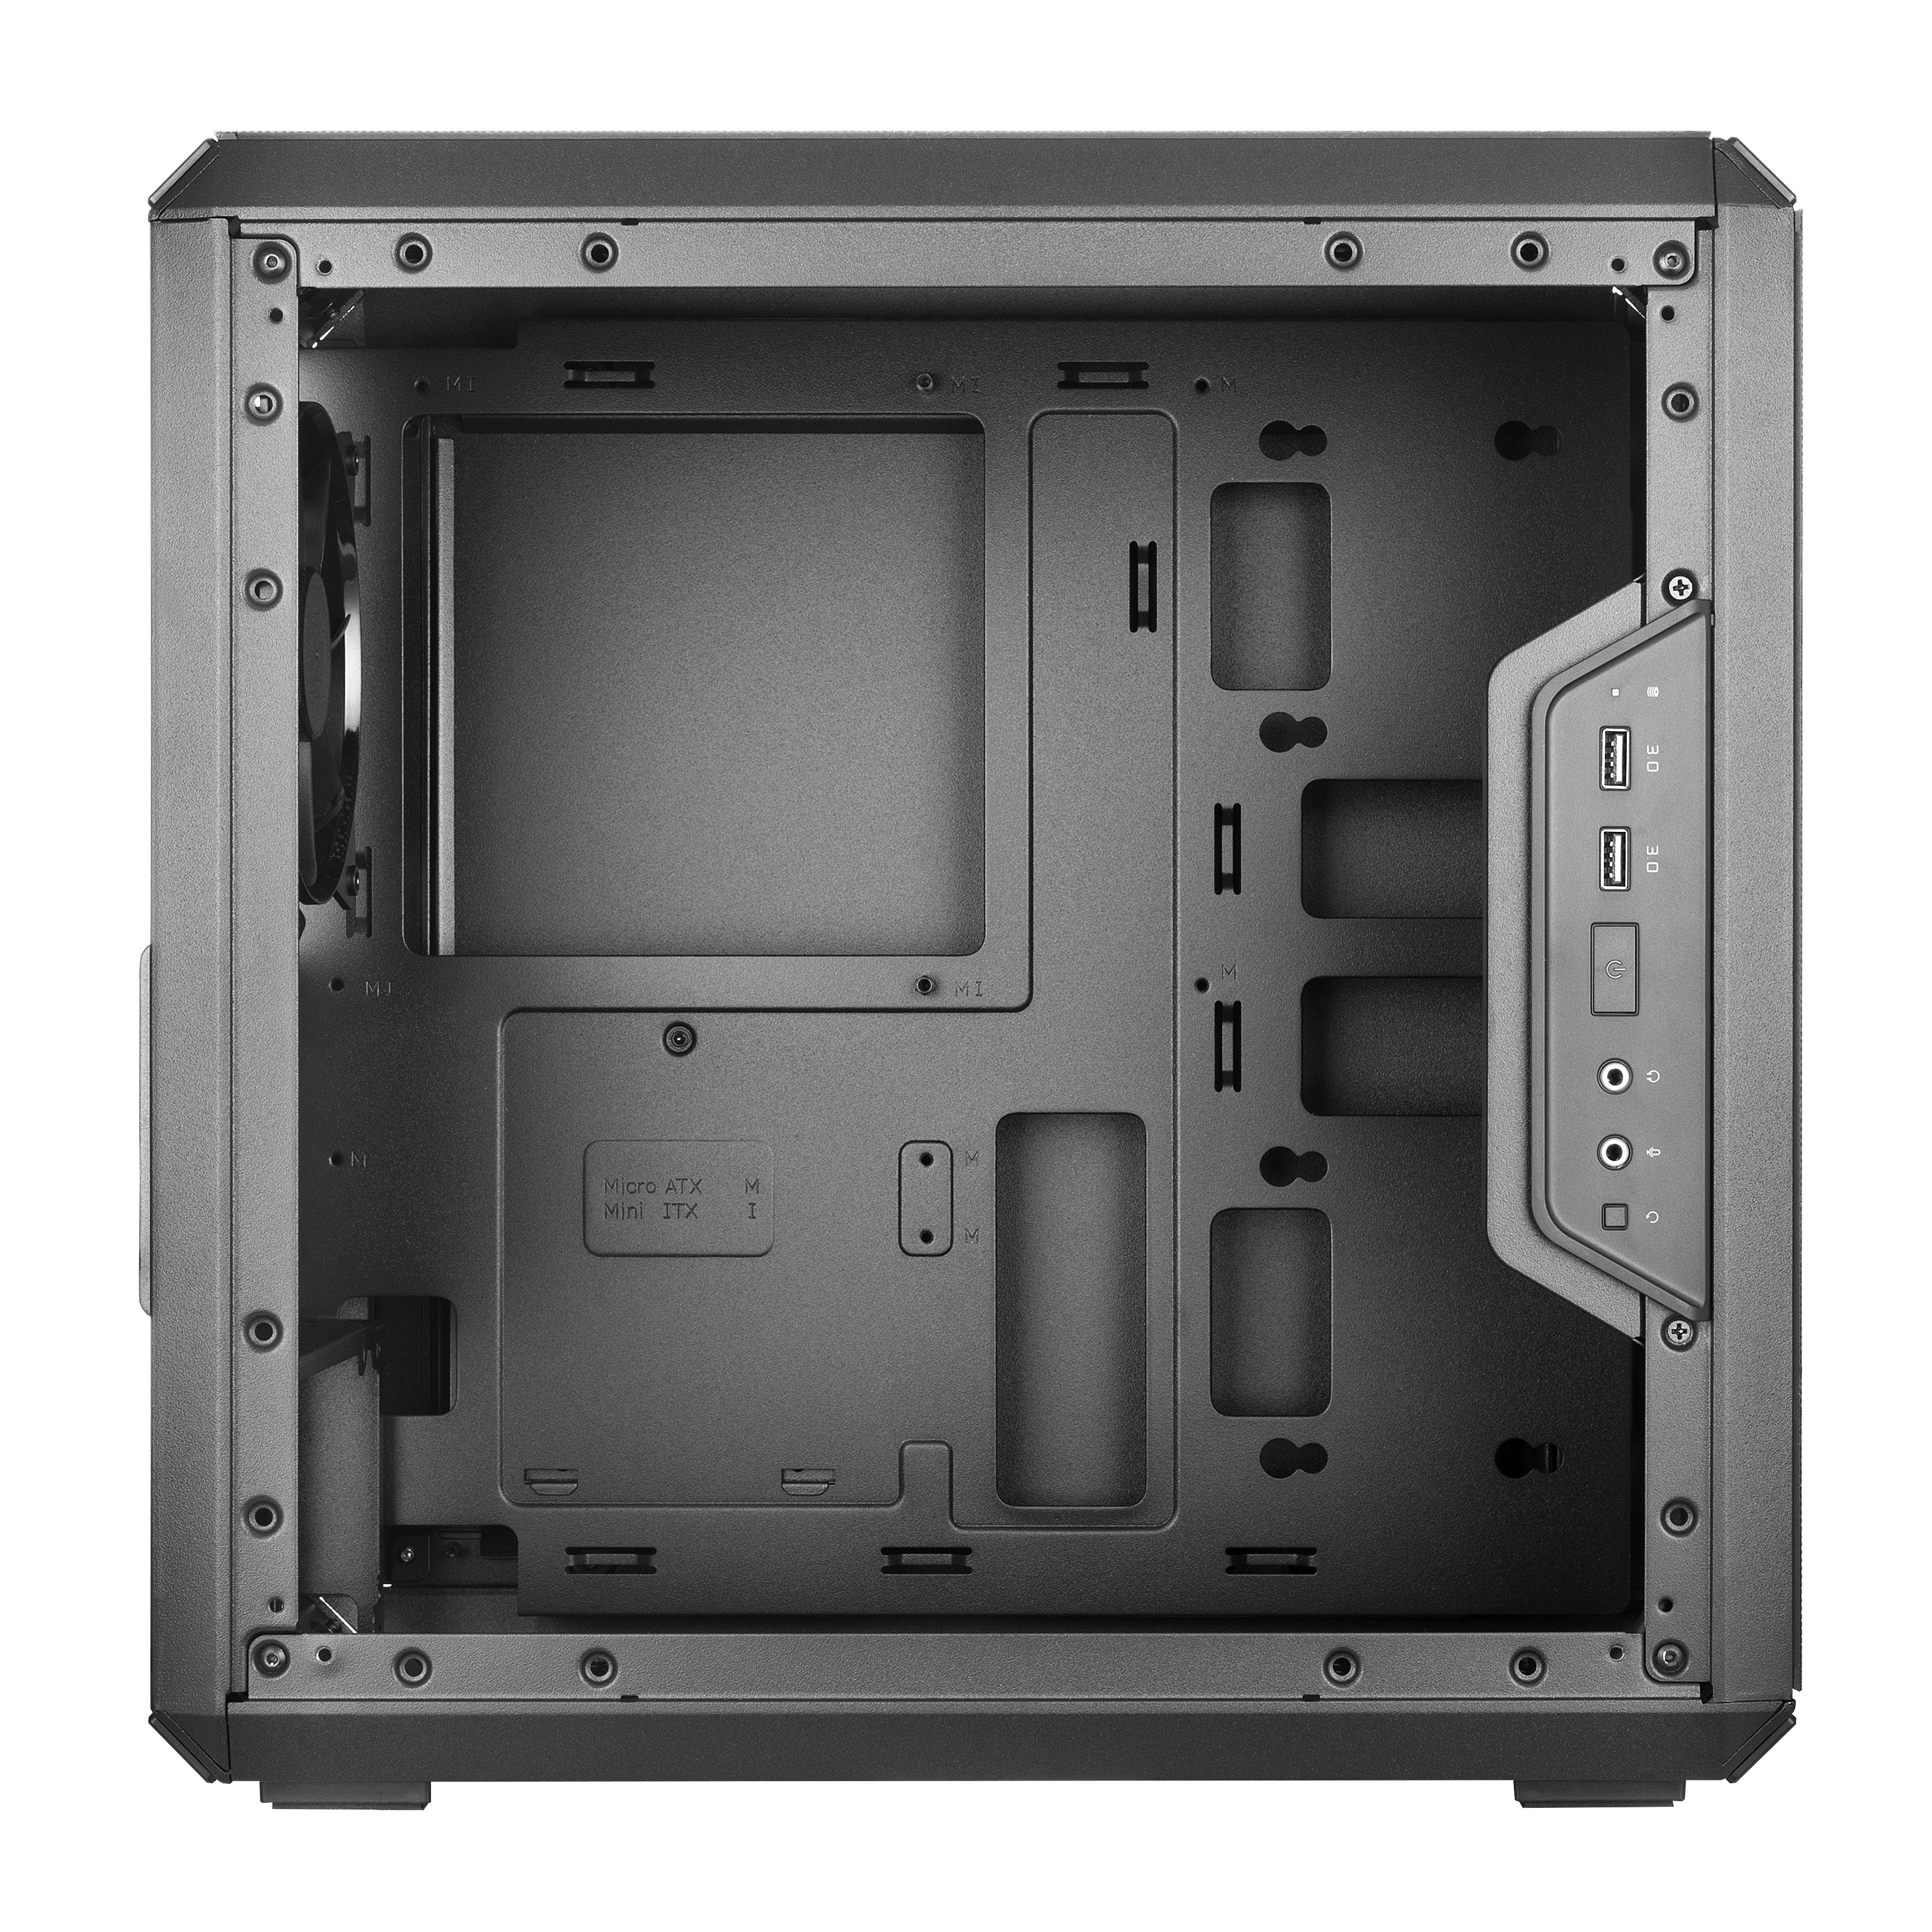 Cooler Master MasterBox Q300L Micro-ATX Case - Black Window